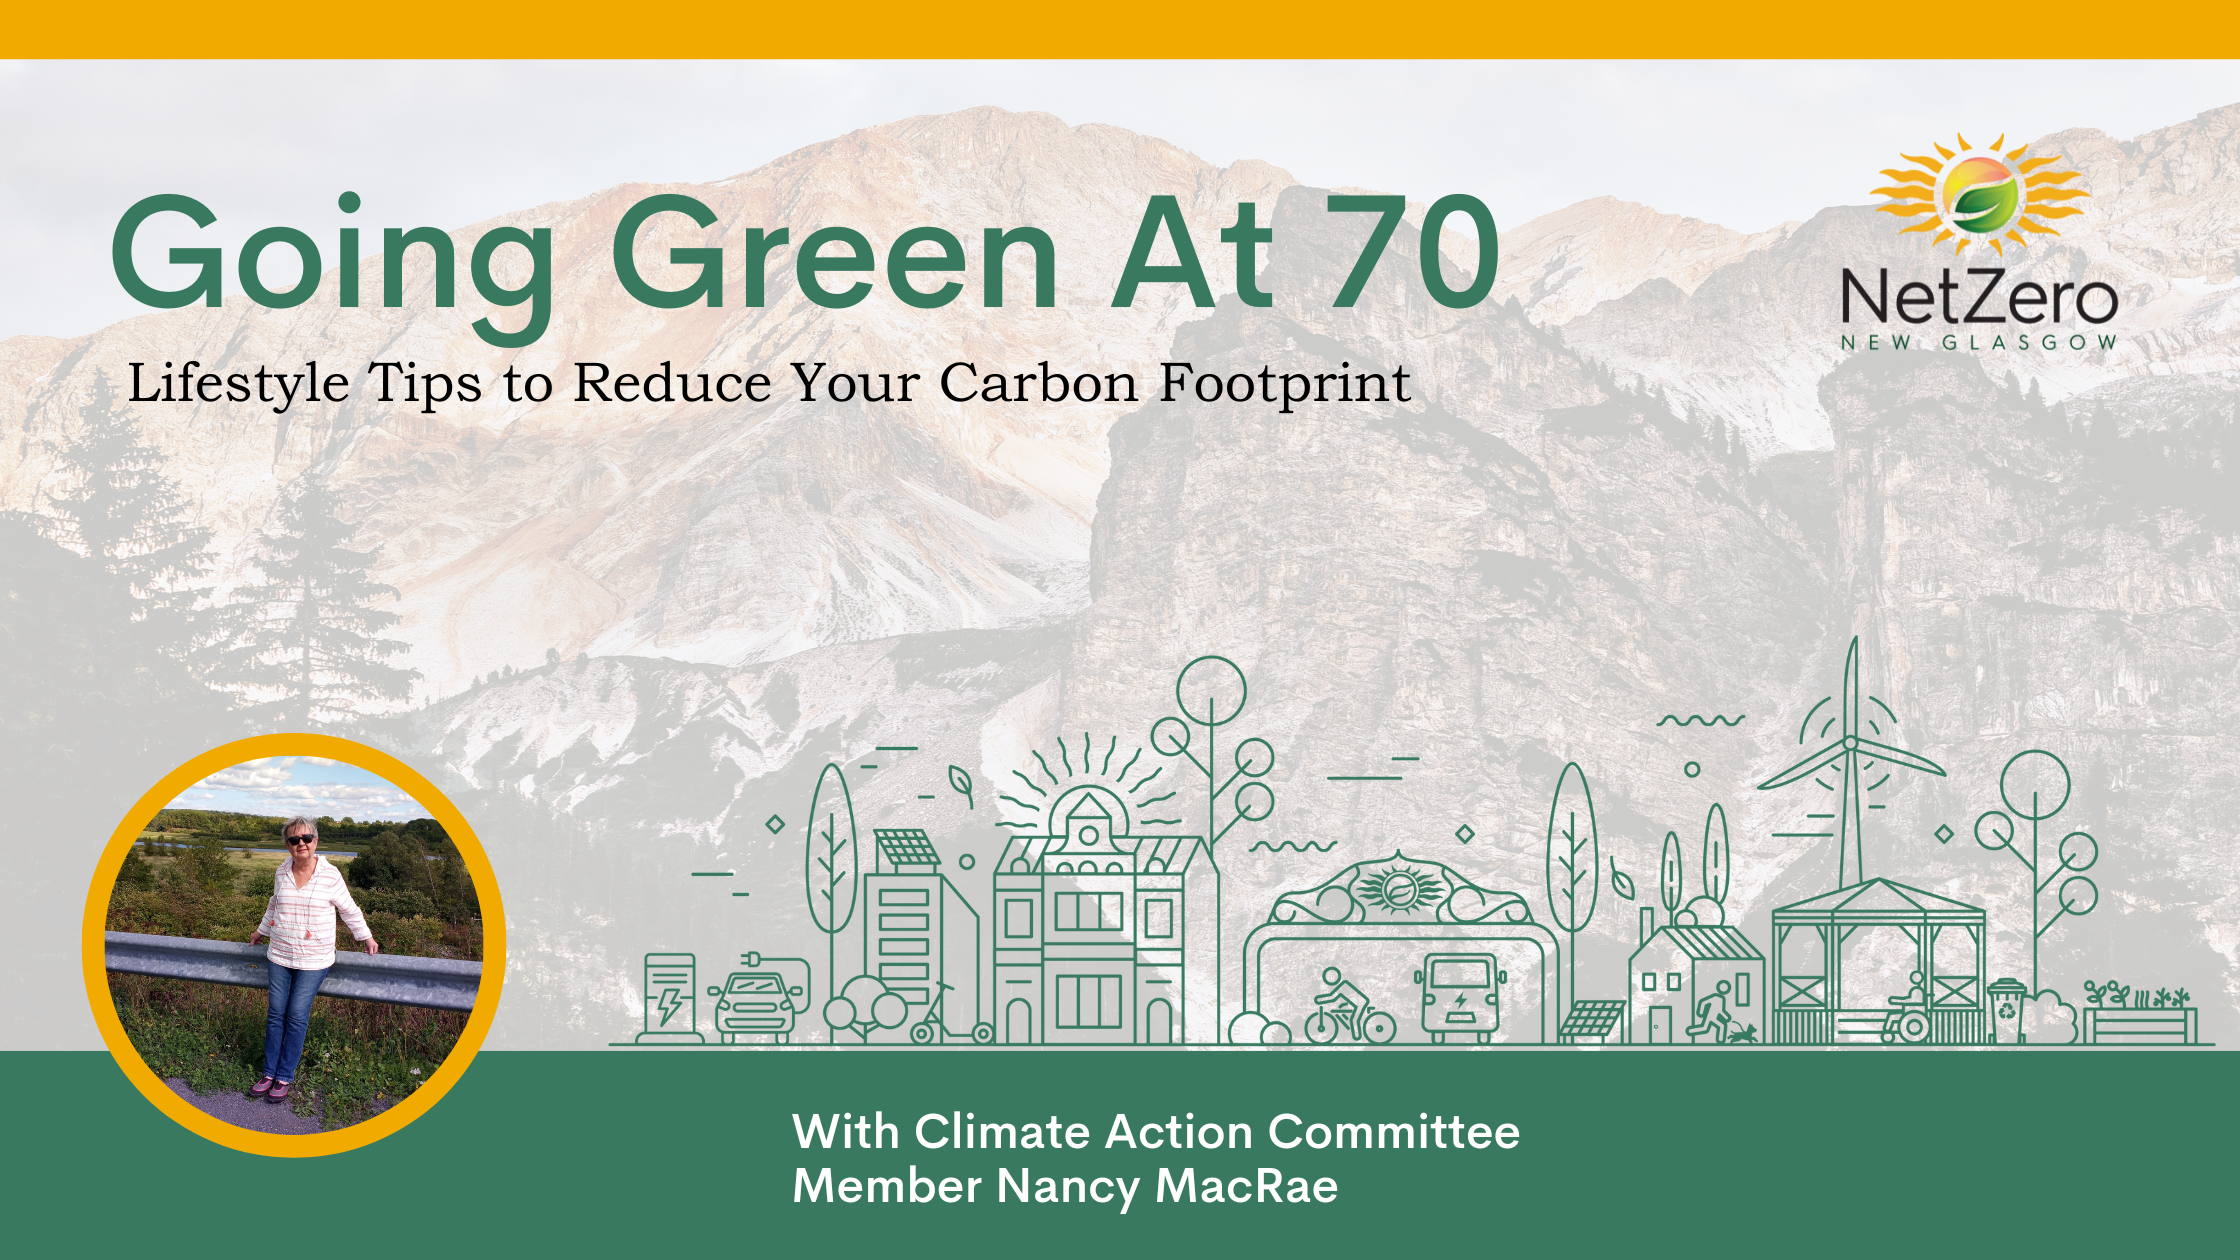 Going Green at 70 Blog Posts carbon foot print